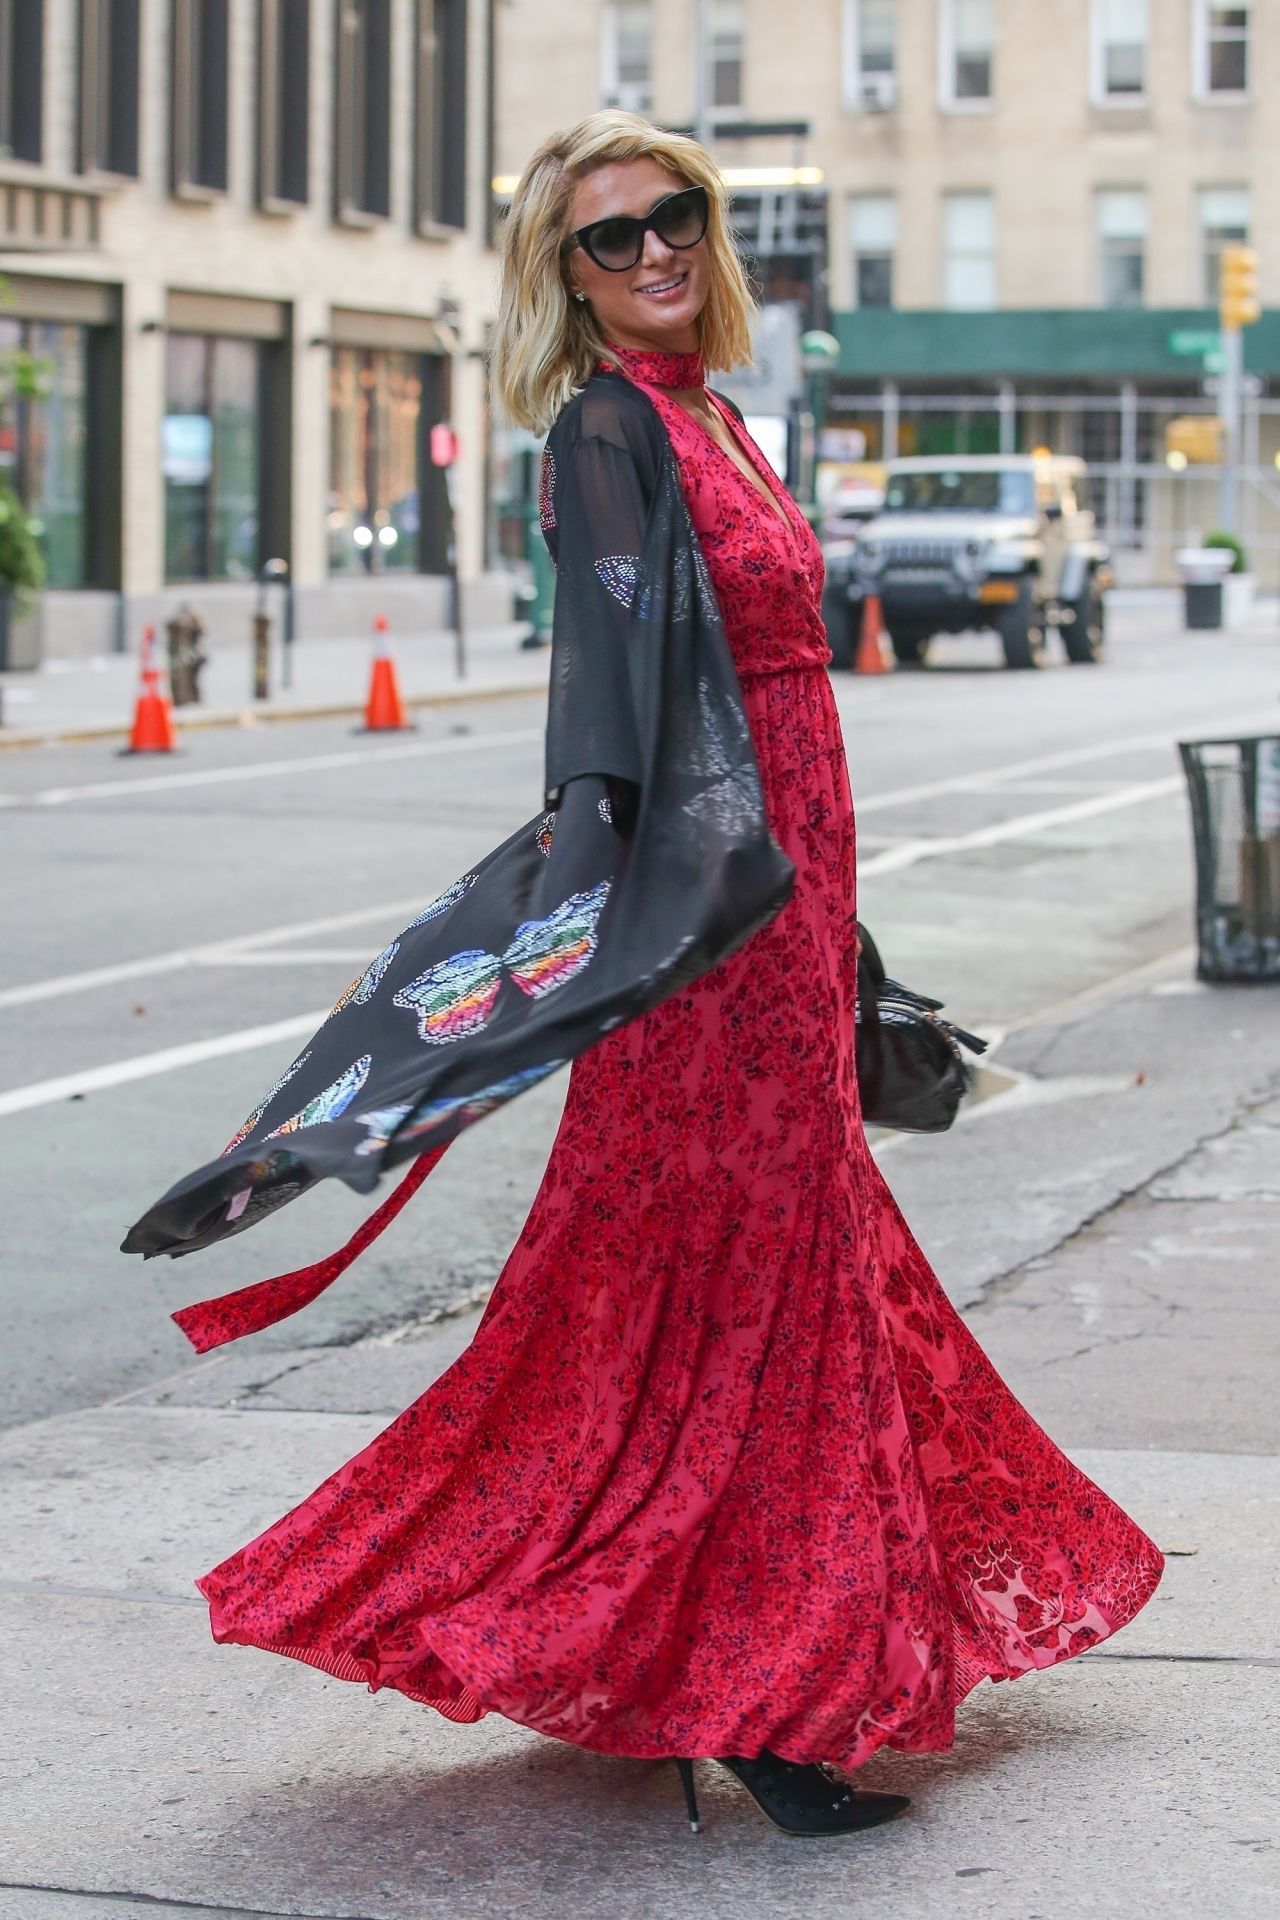 Paris Hilton in an Elegant Floral Dress - New York City 06/22/2021 ...